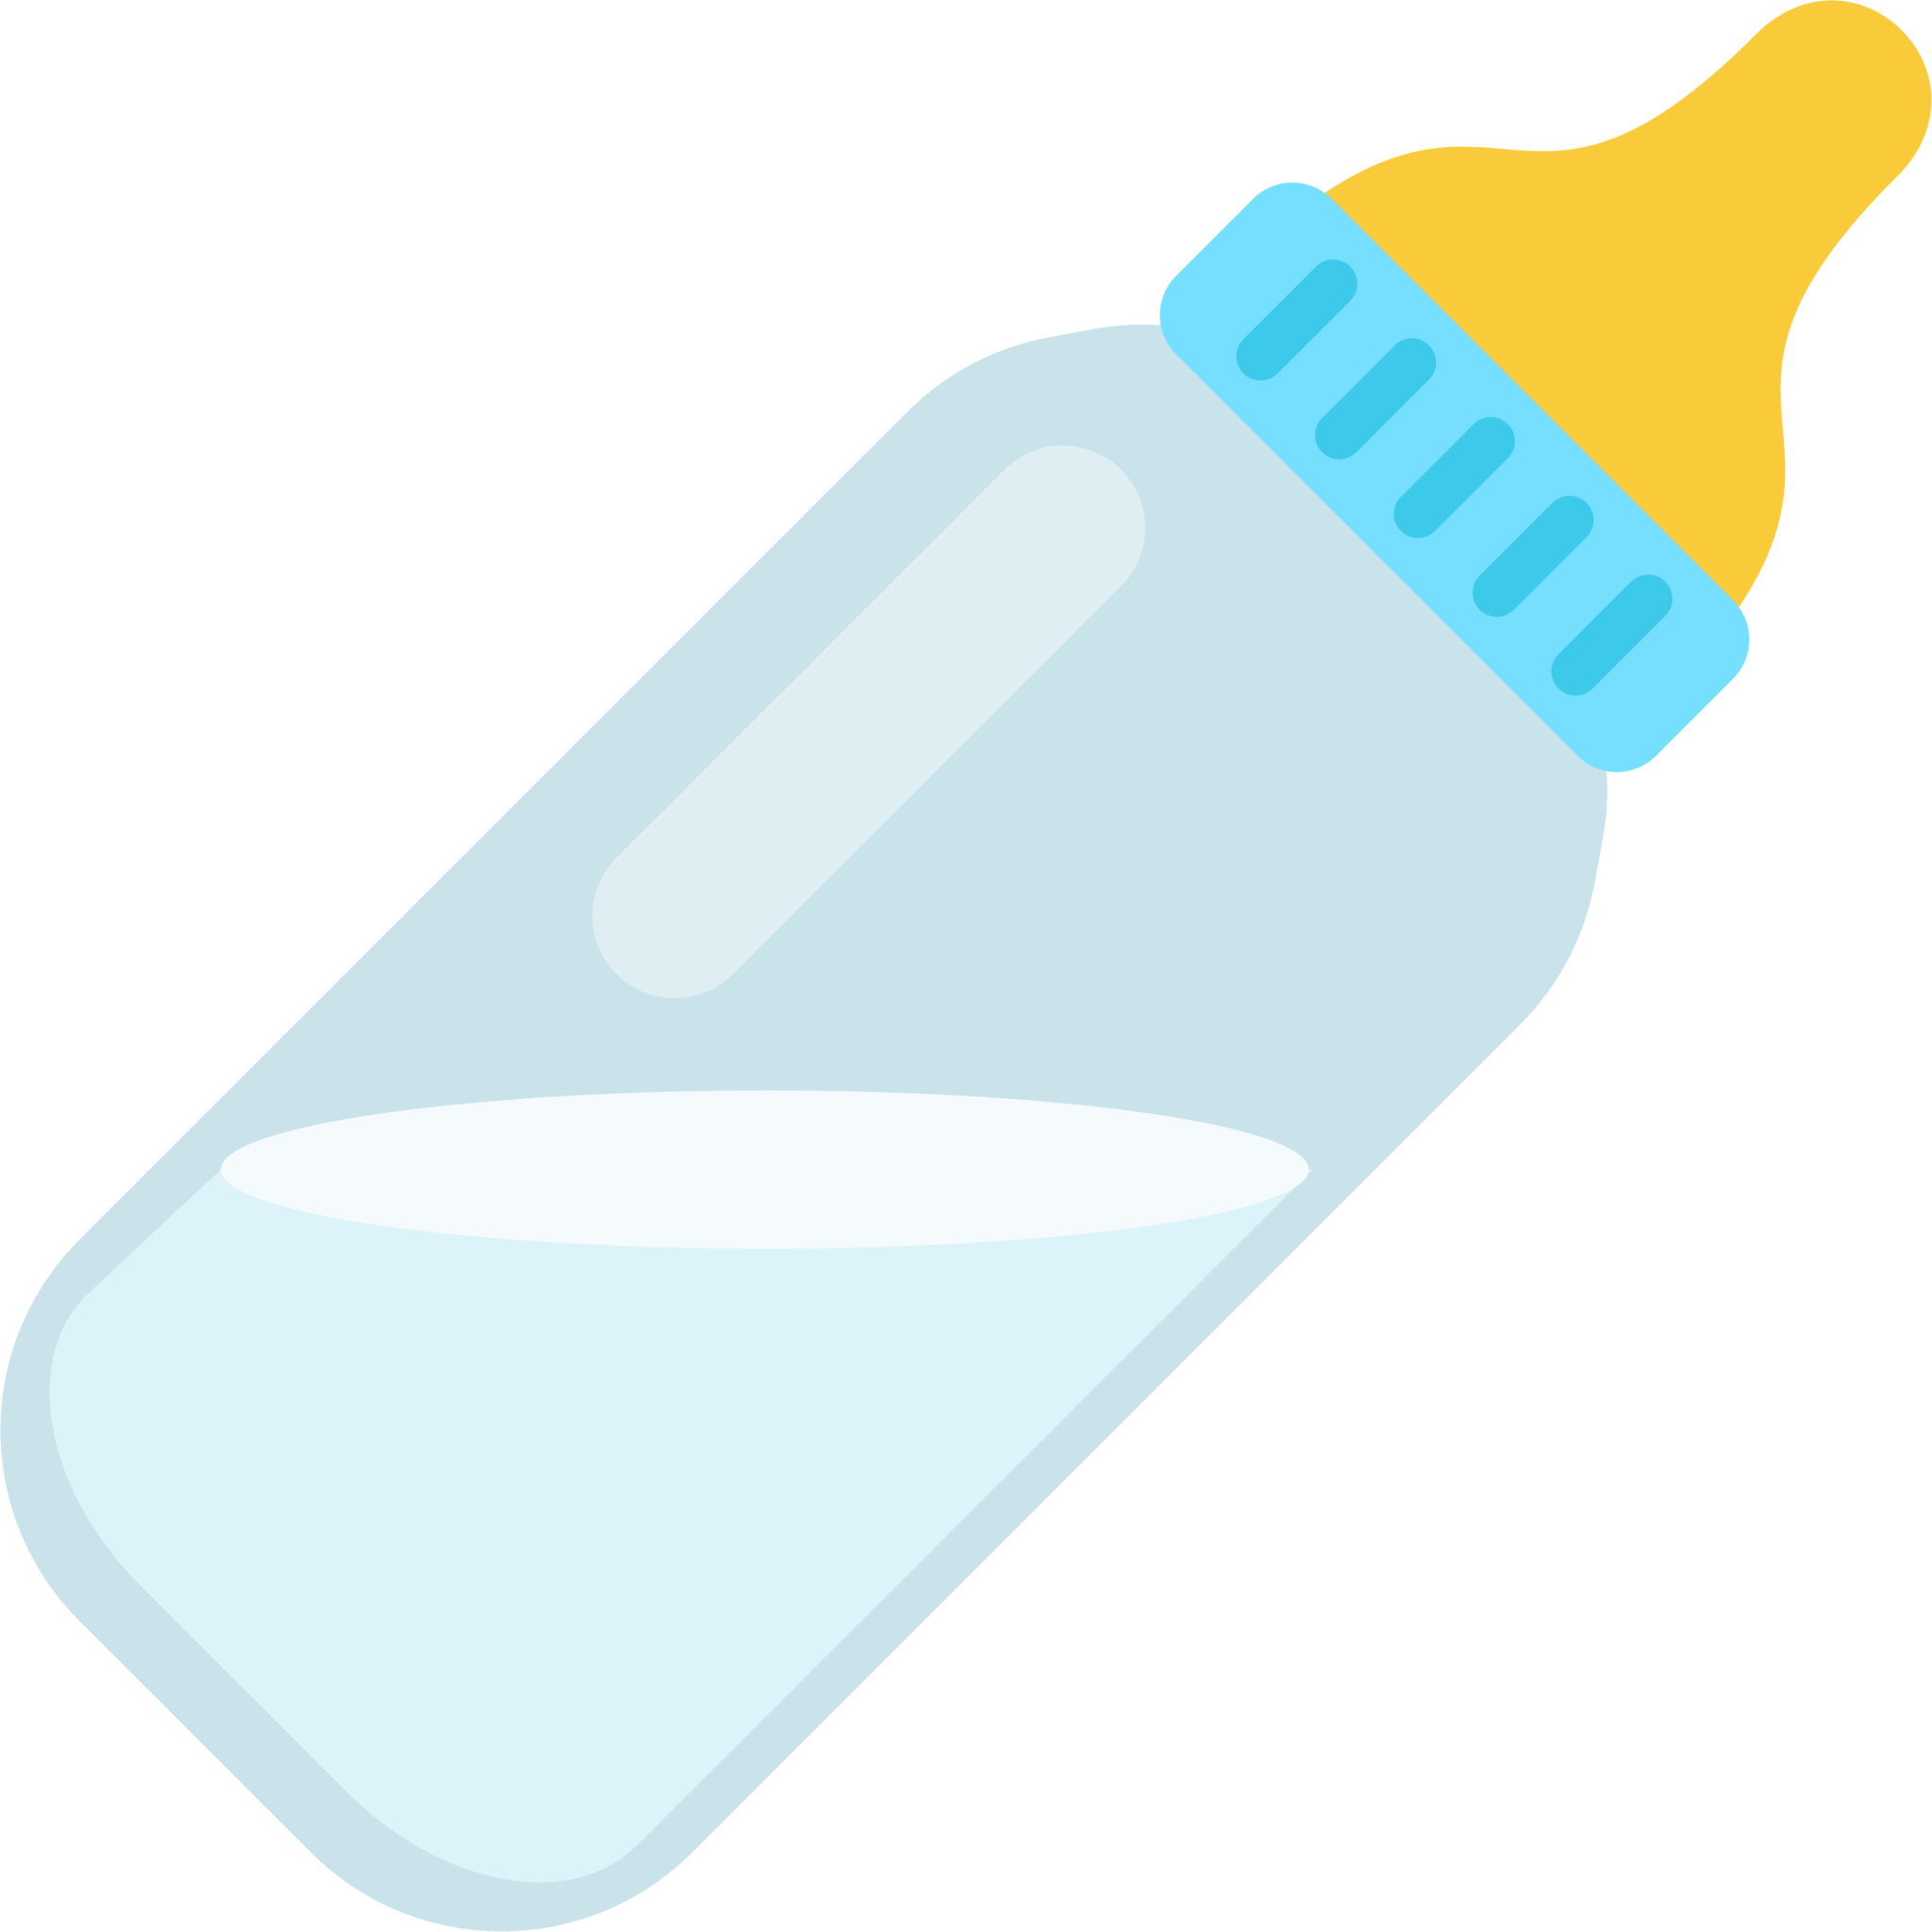 bottle emoji